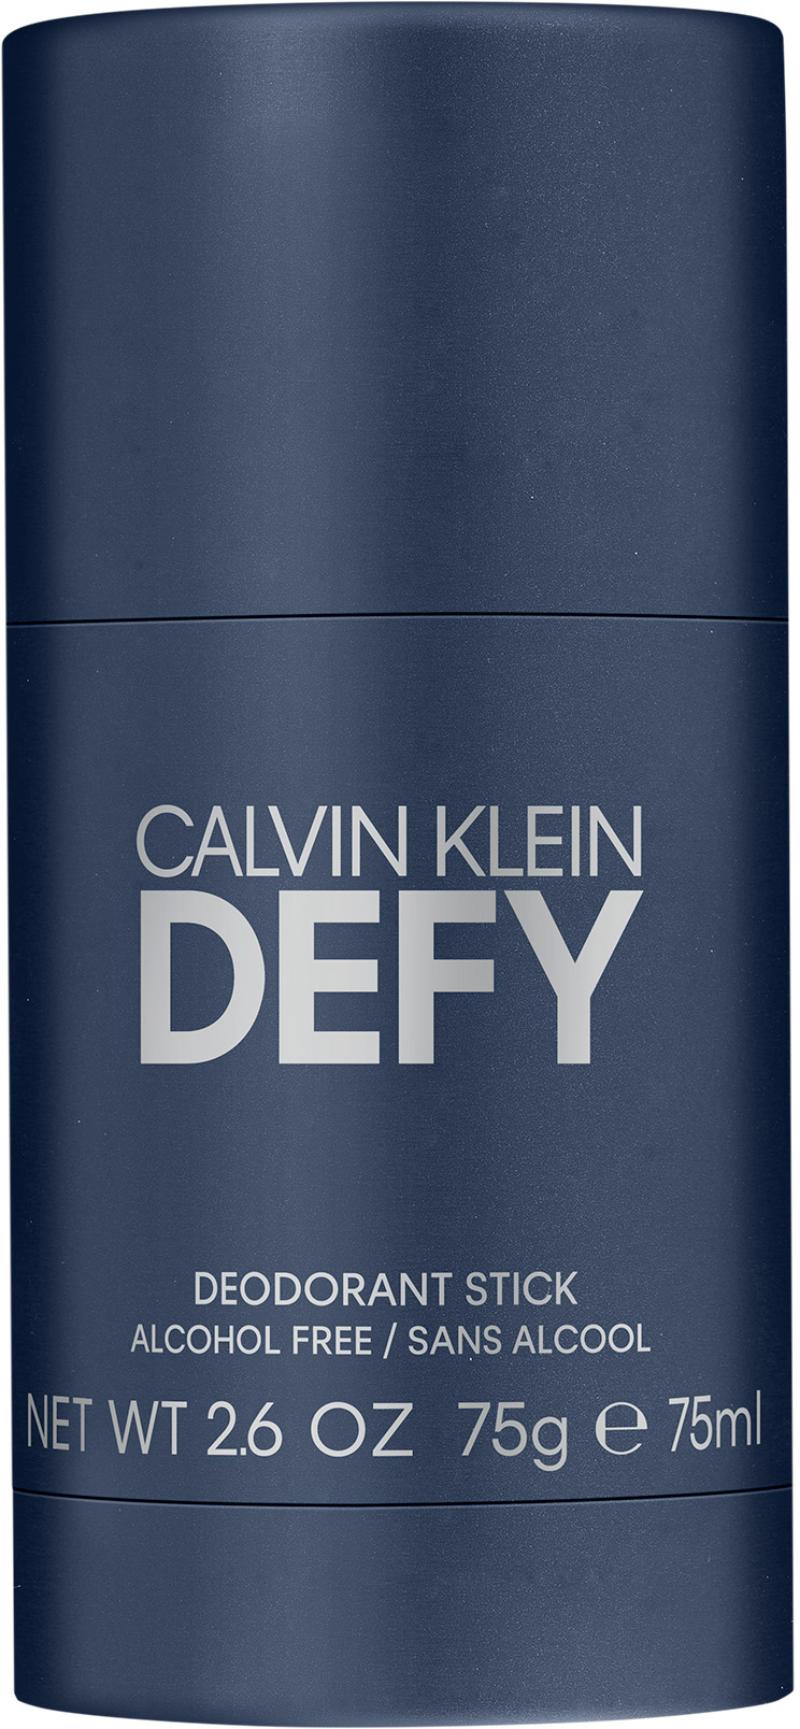 Calvin Klein CK Defy - tuhý deodorant 75 ml